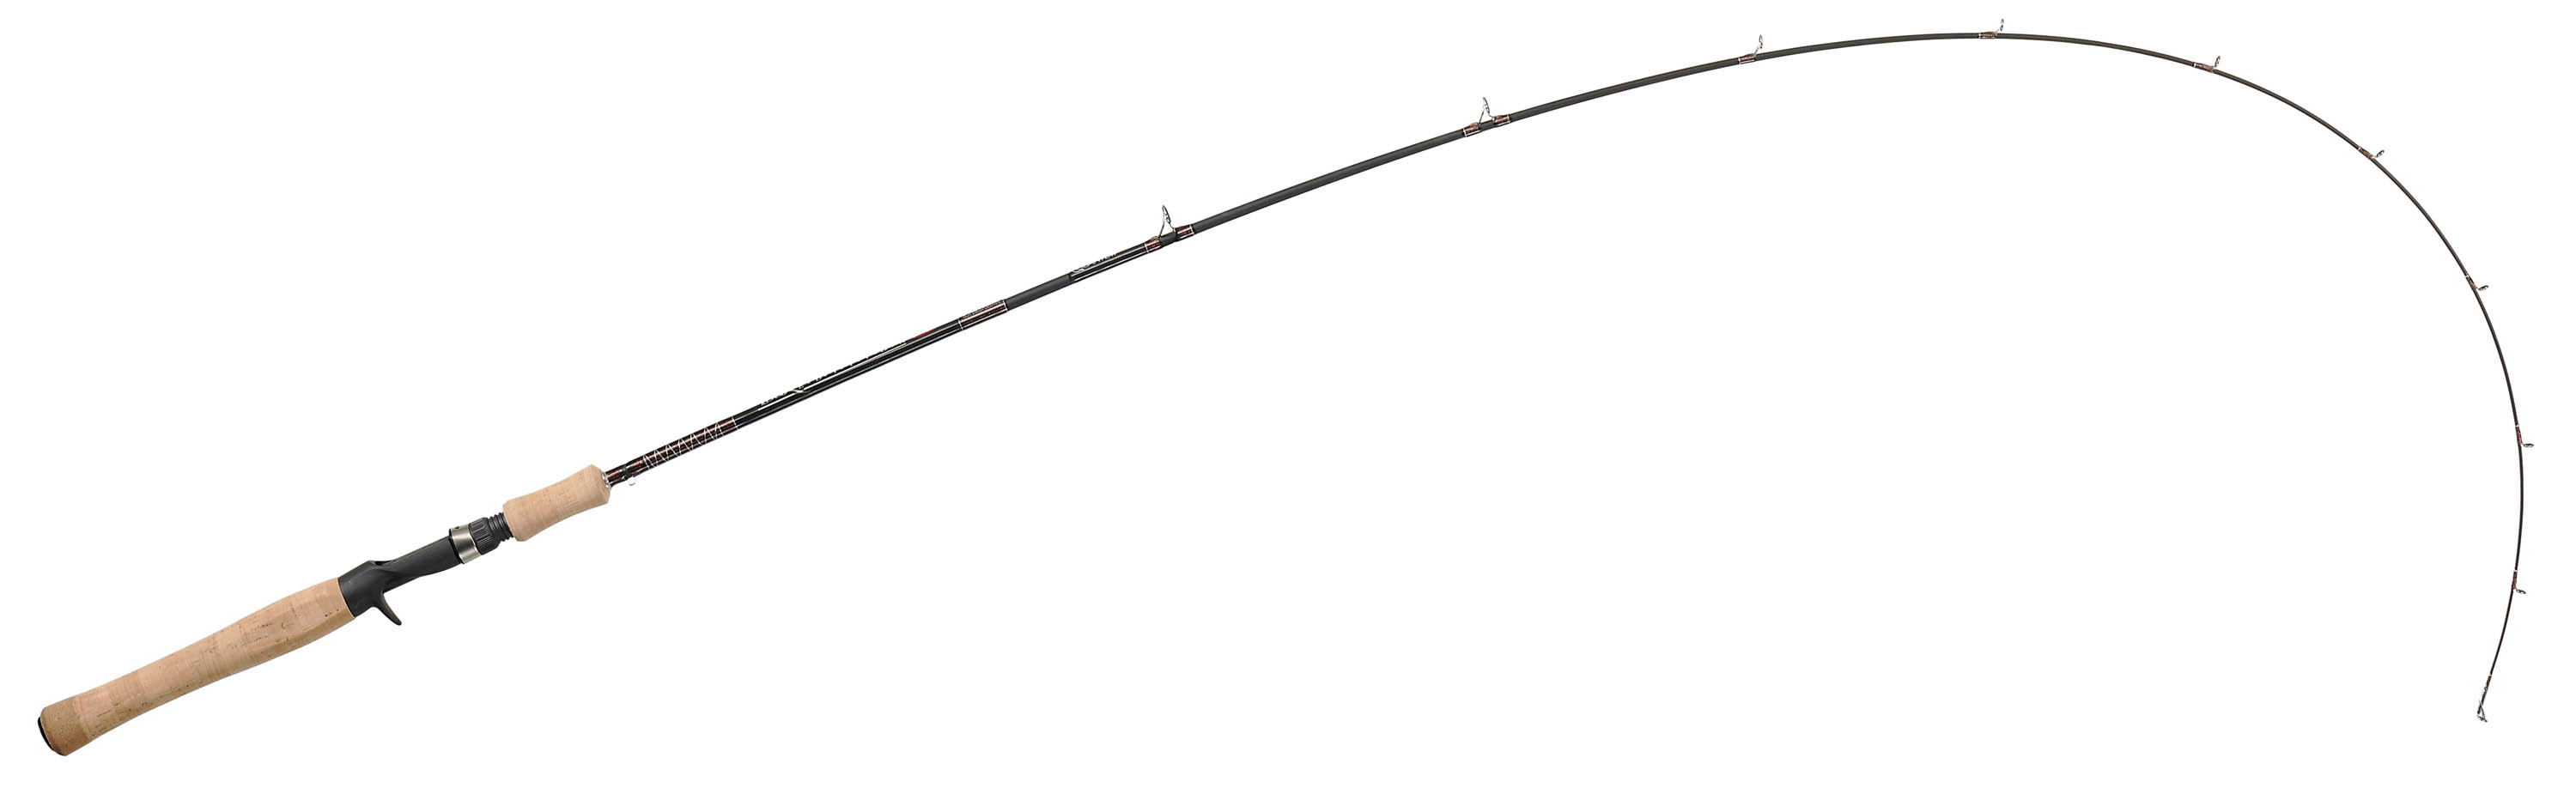 bent fishing rod - Clip Art Library